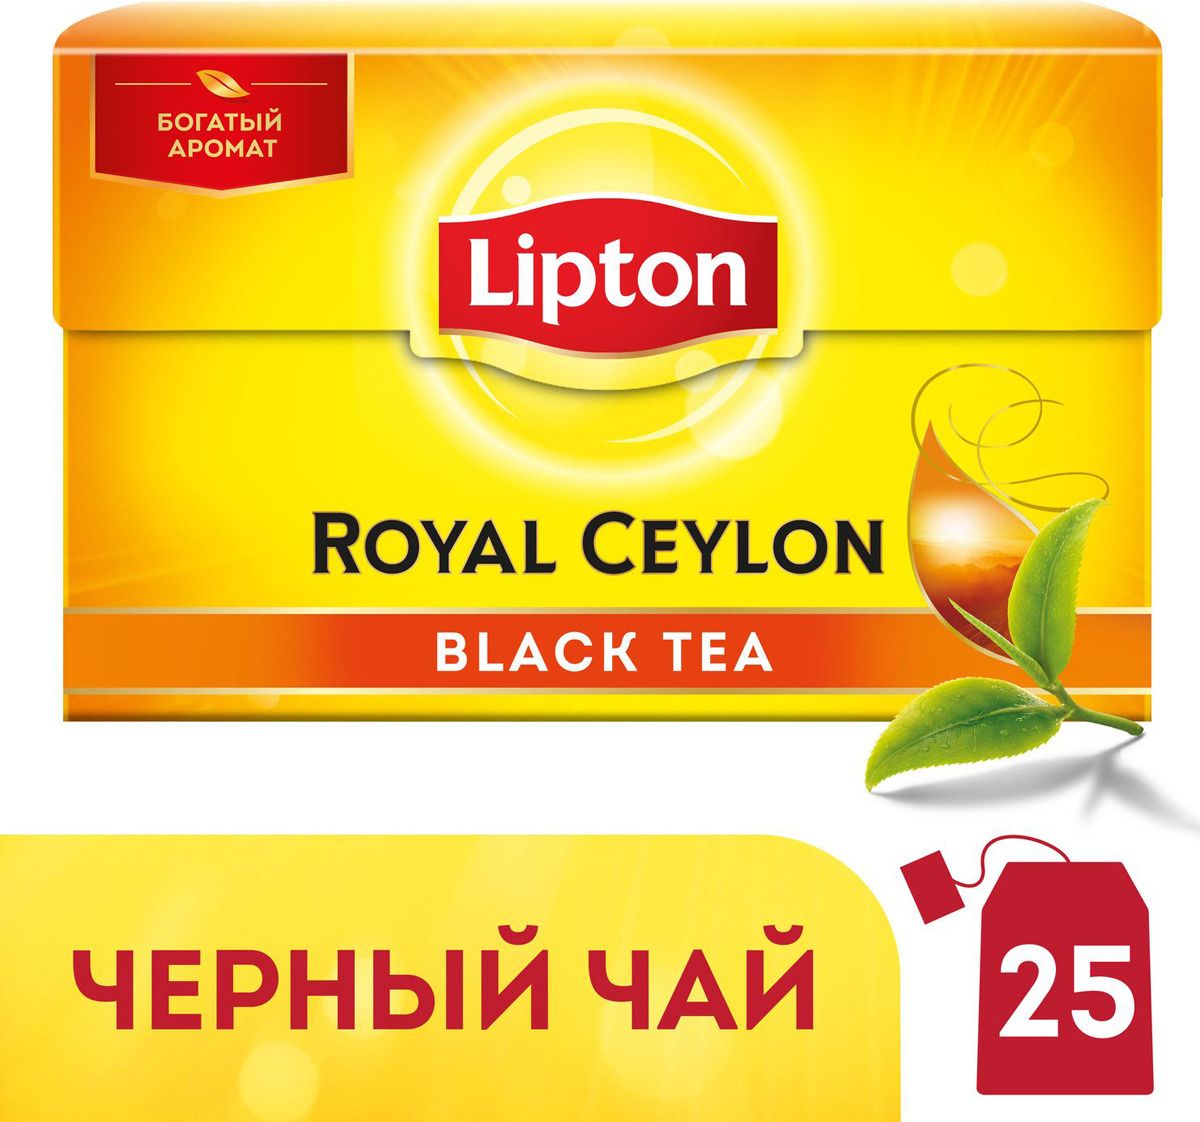 Lipton   Royal Ceylon 25 